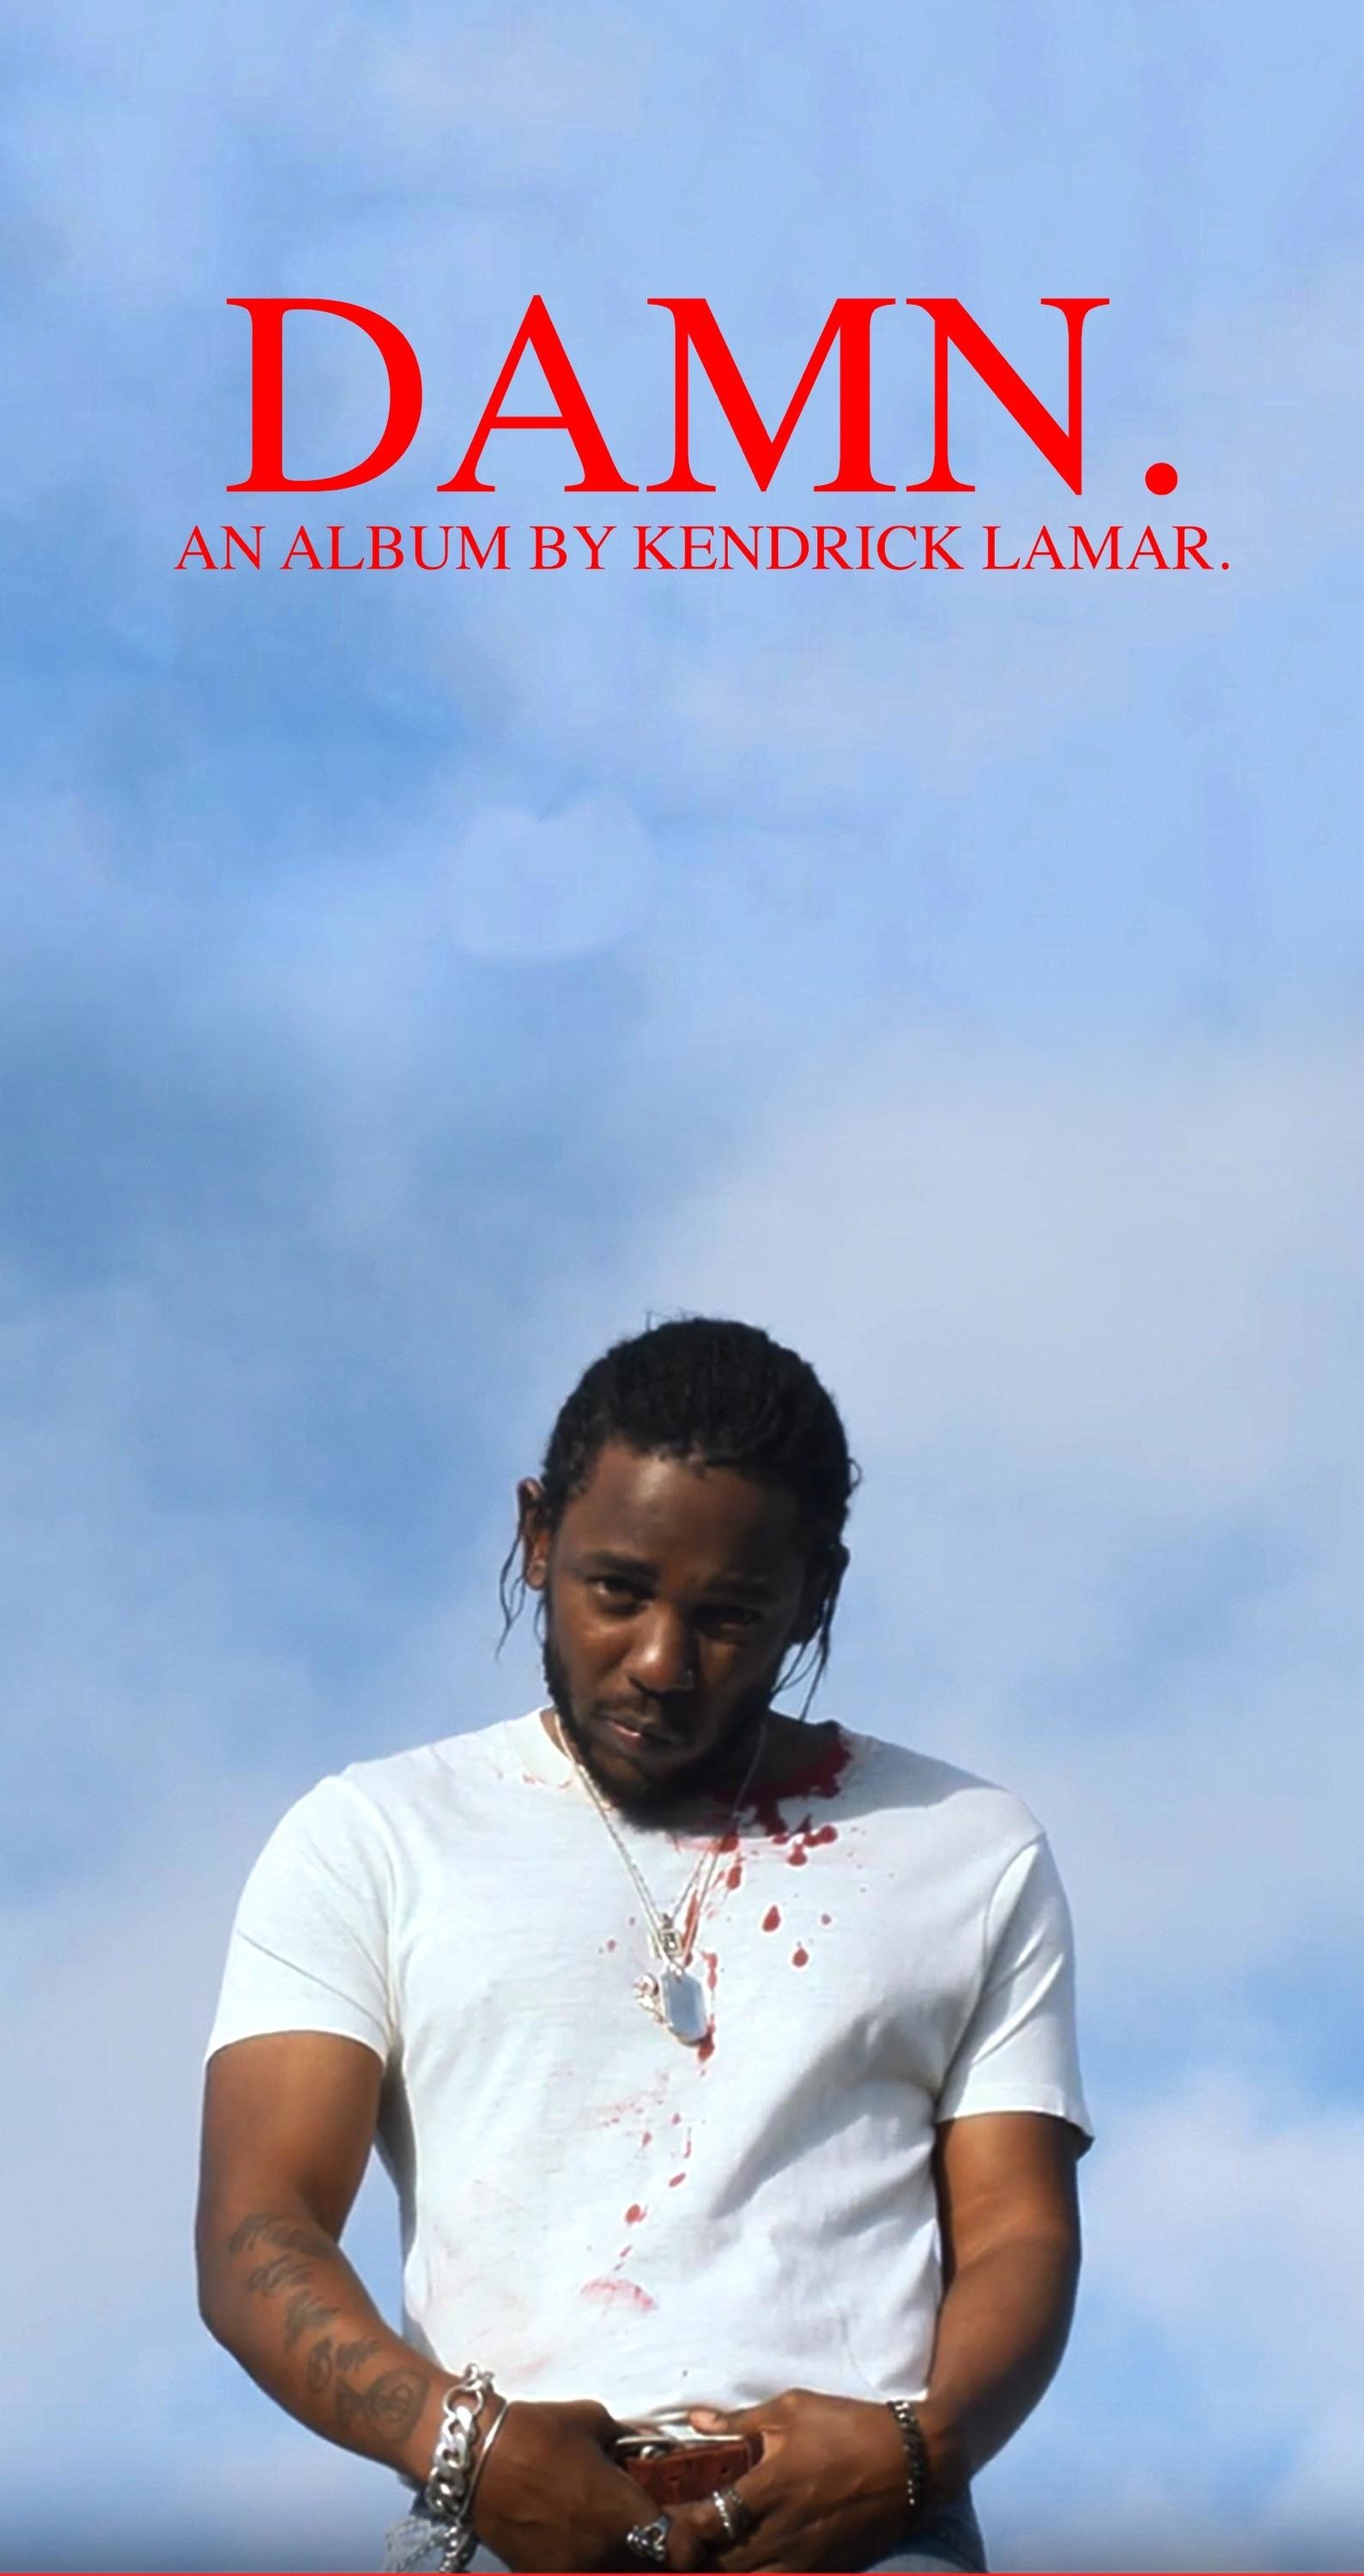 Kendrick Lamar Wallpapers 76 images 1589x3000